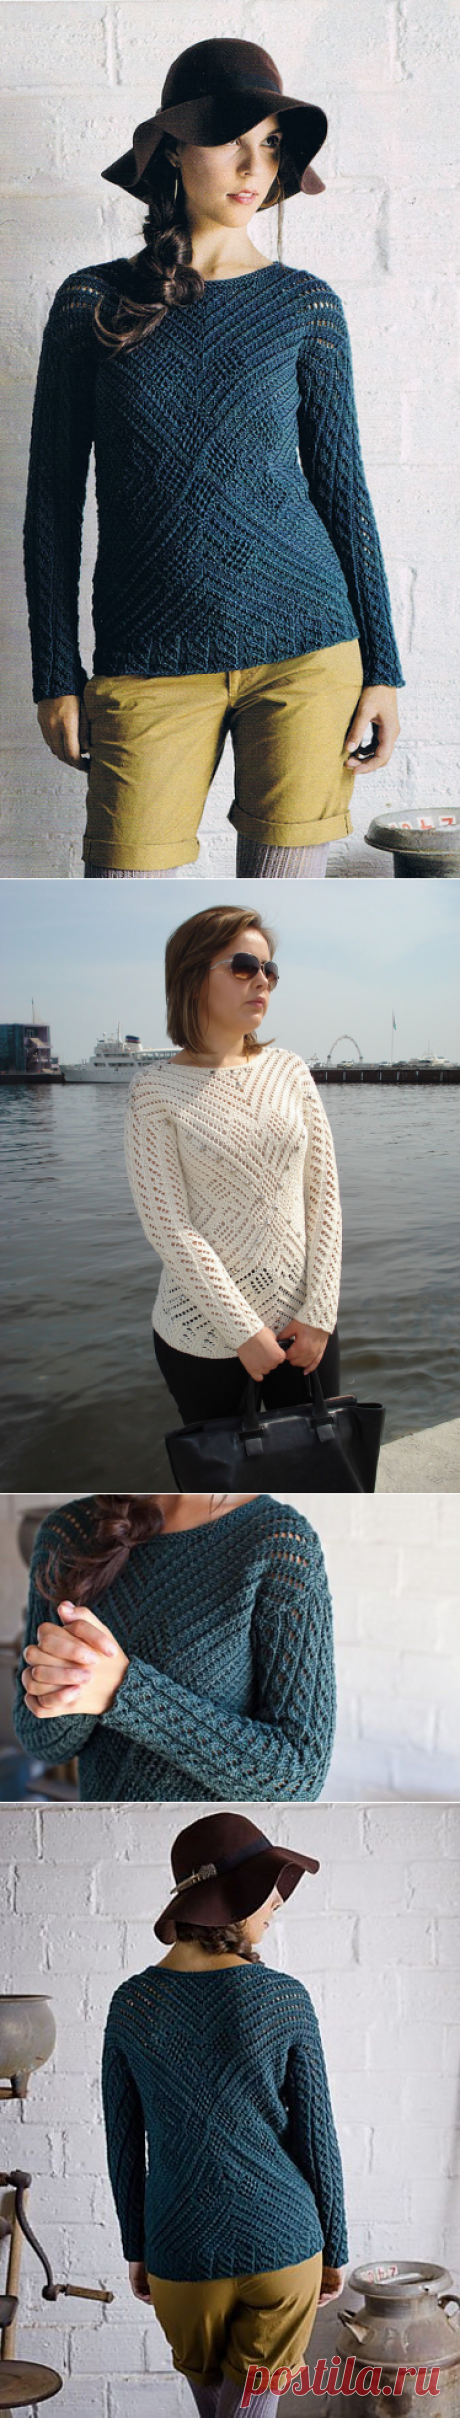 Изумрудный пуловер - Minnette Pullover by Cassie Castillo - Knitscene, Winter 2012